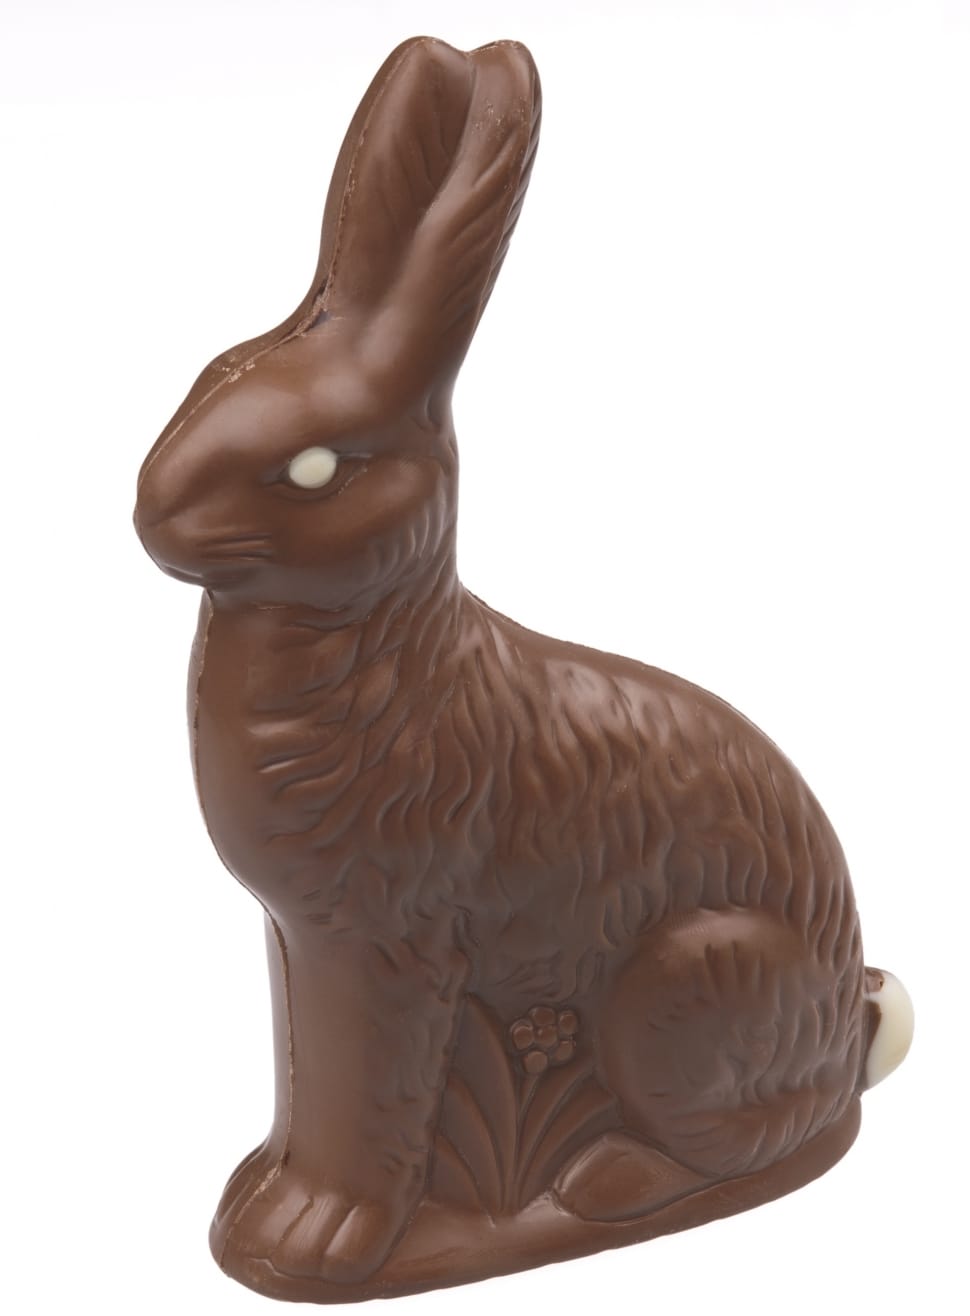 brown rabbit figurine preview